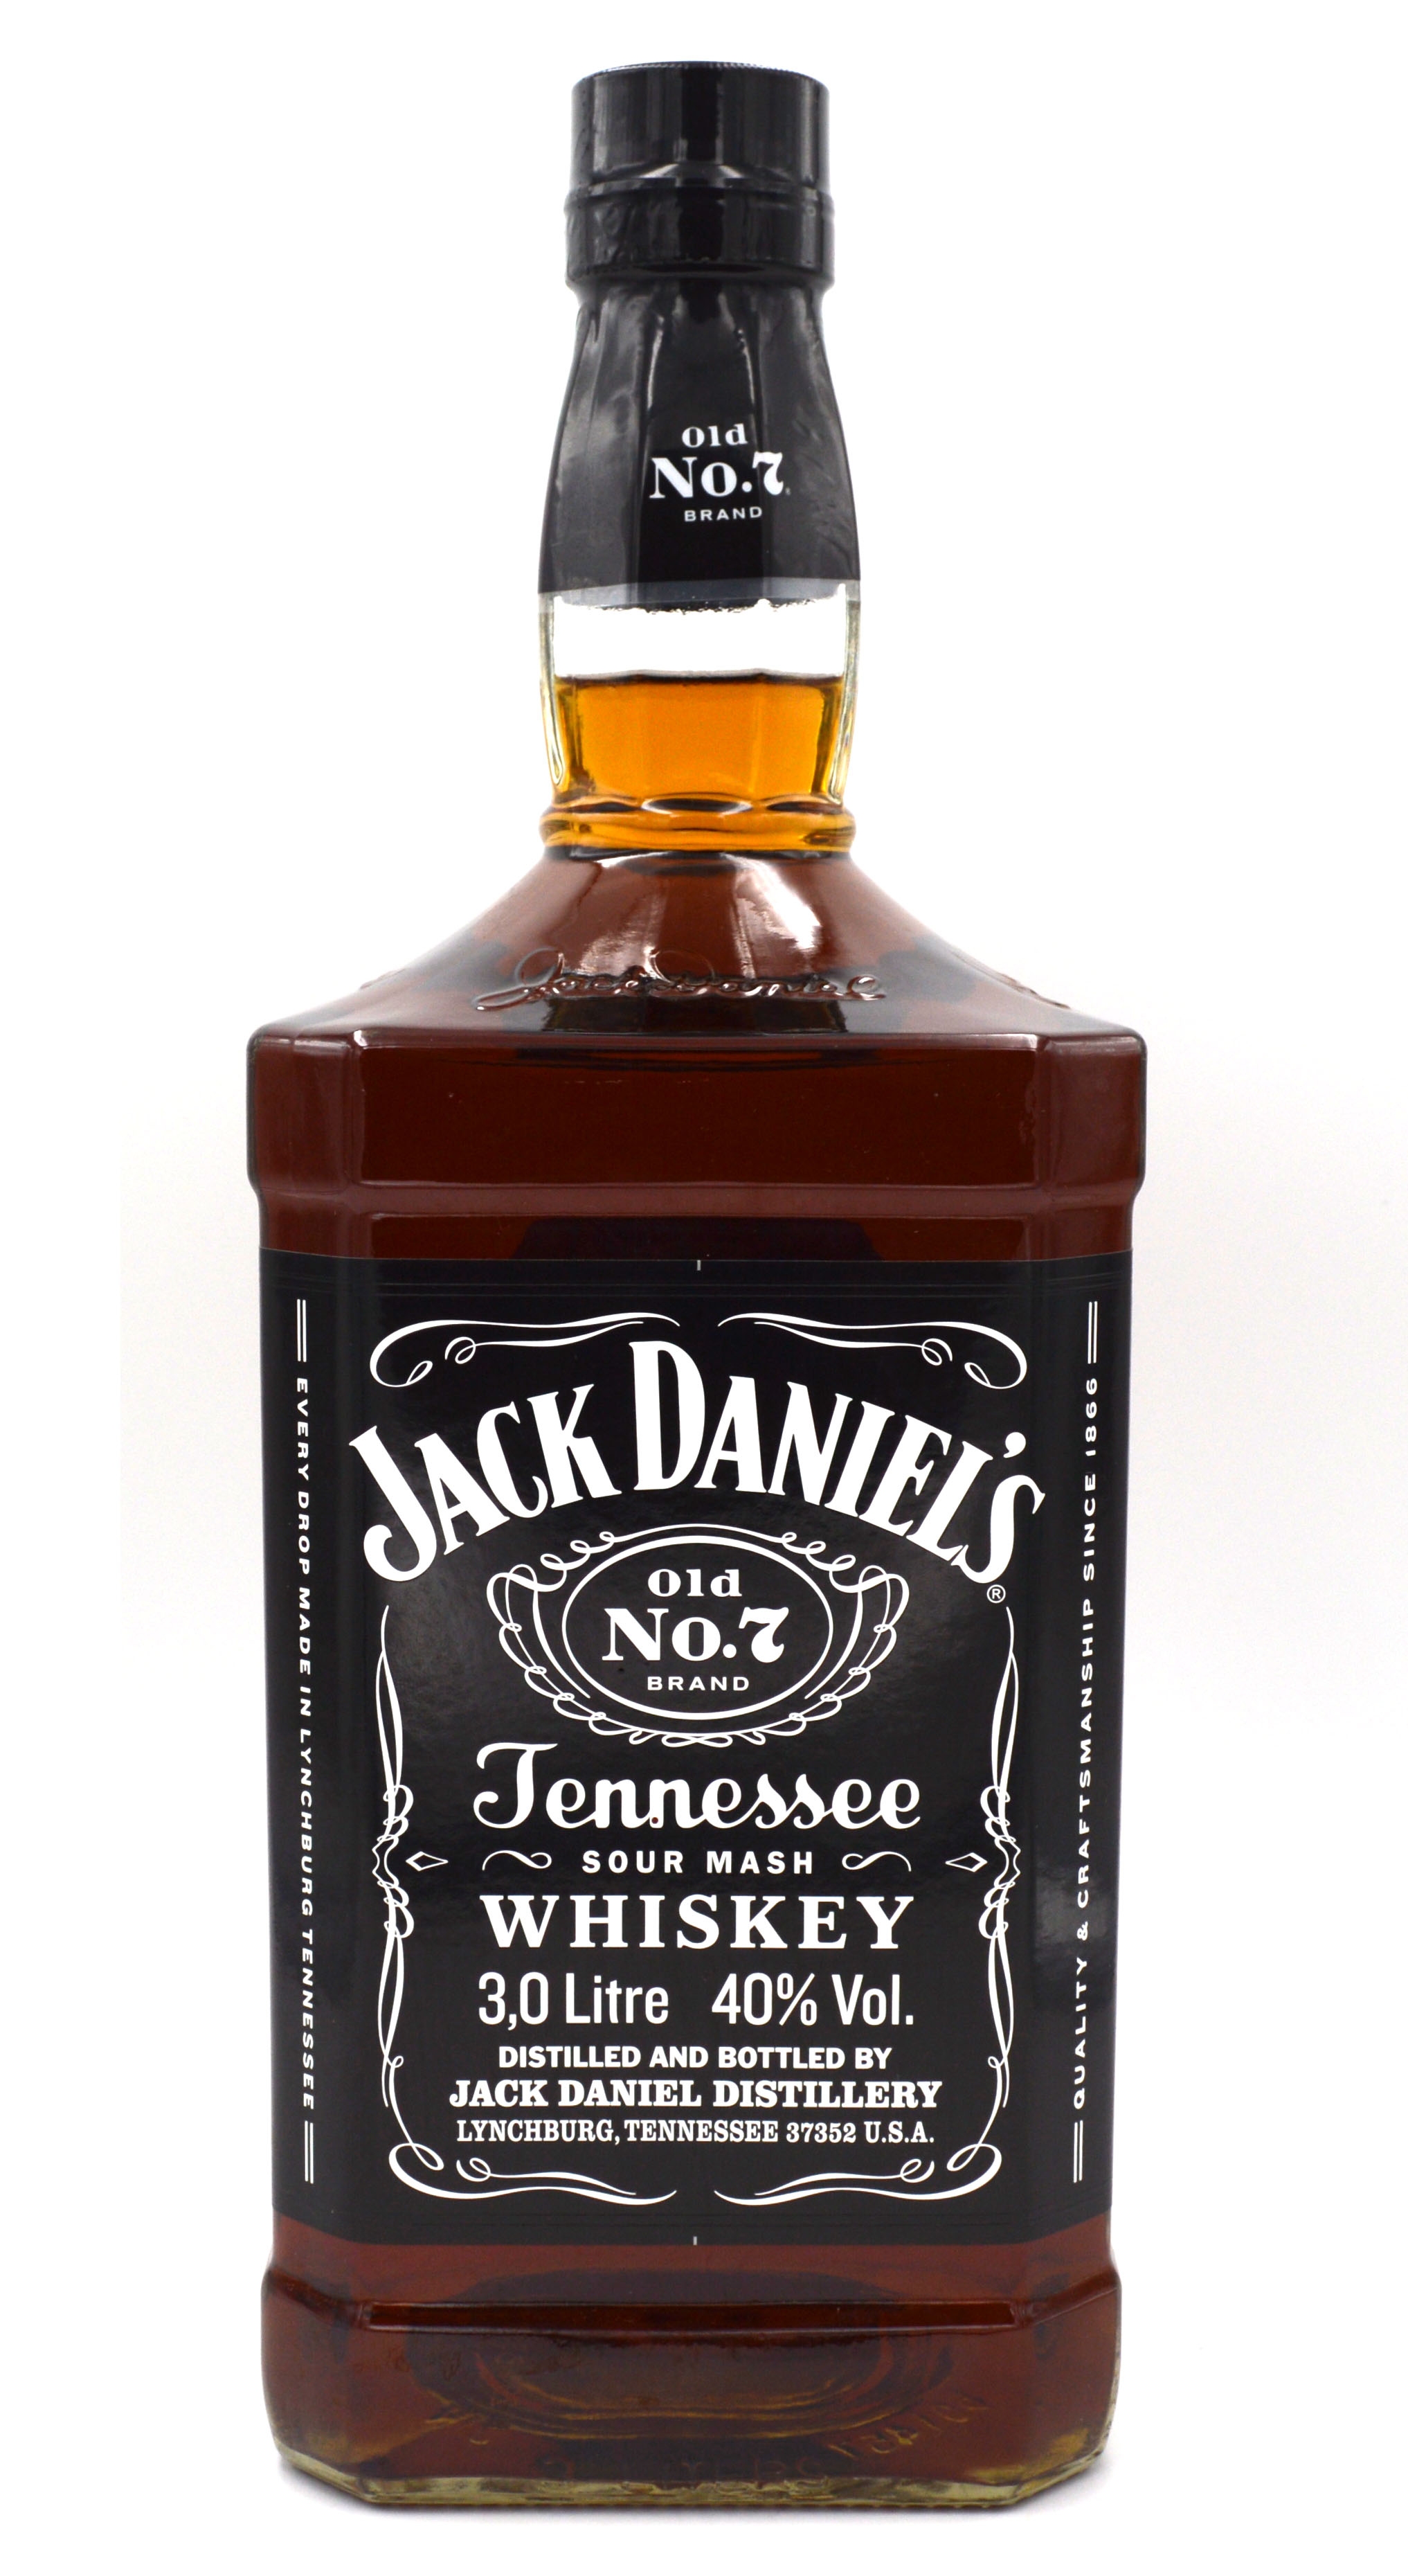 Old Jack double worldwidespirits bottle No.7 magnum | Whiskey Daniel\'s 3.0l